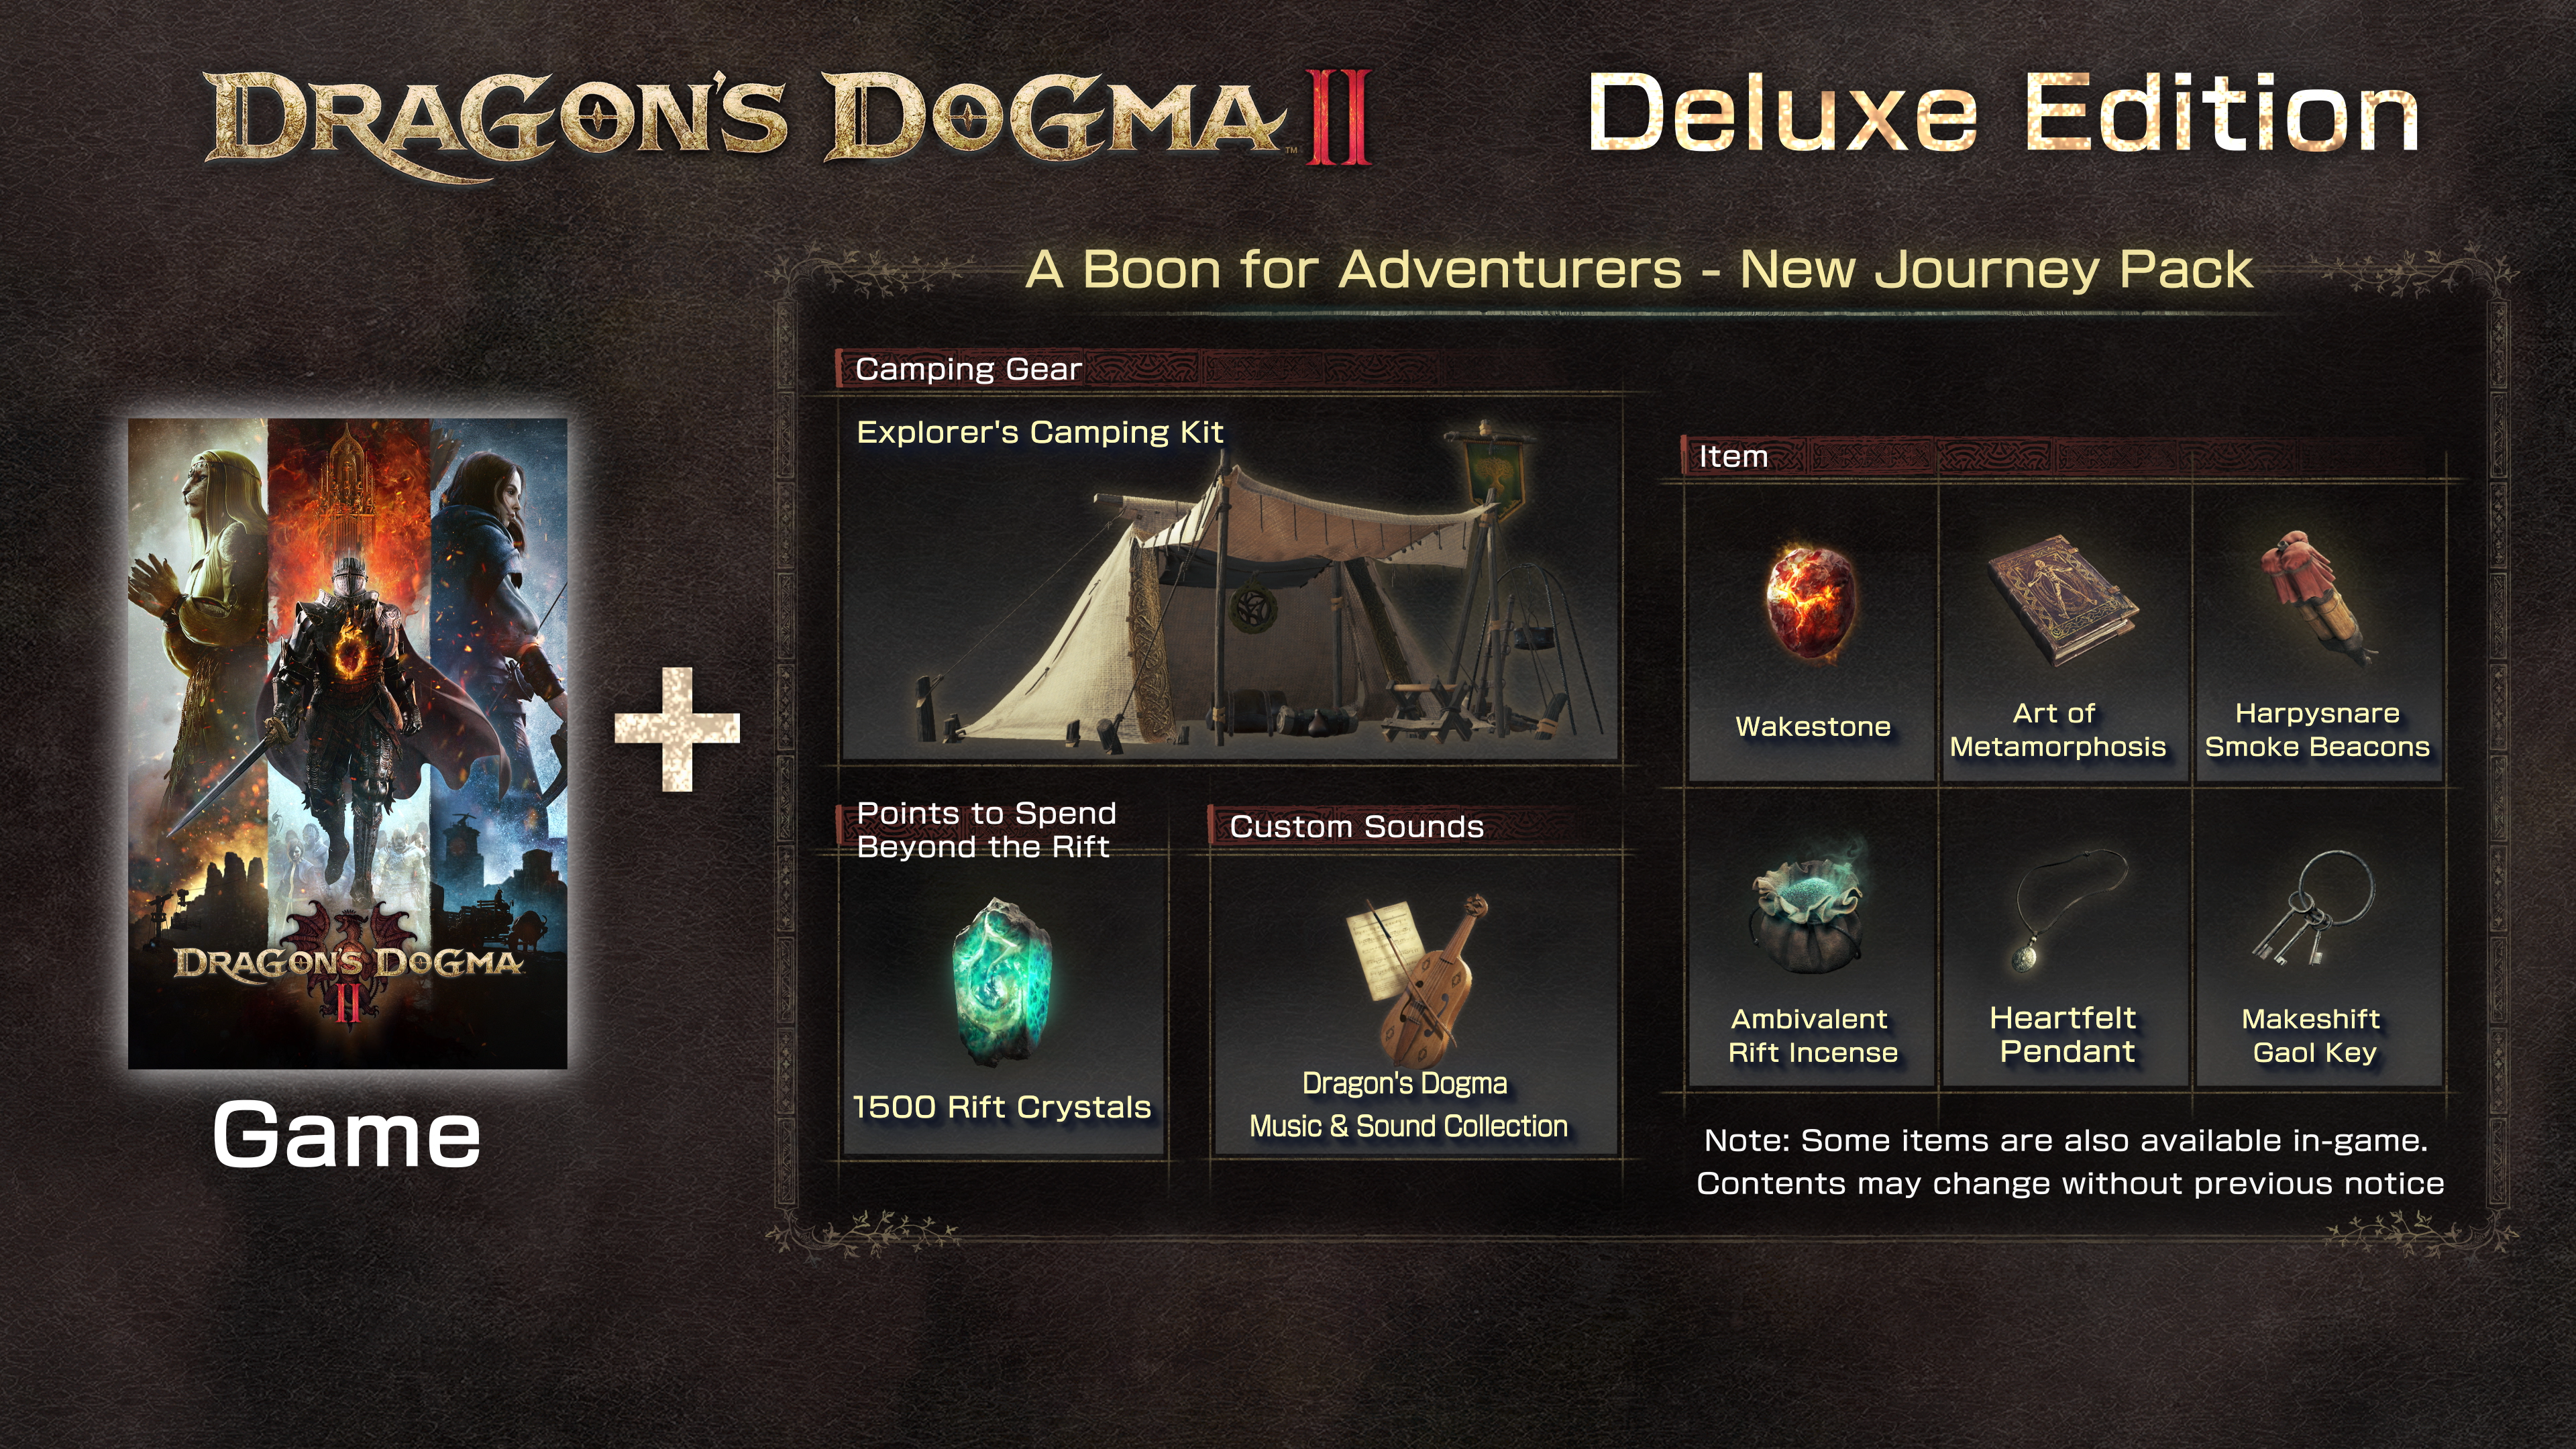 Dragon's Dogma: Dark Arisen - New PC Screenshots + Trailer Released